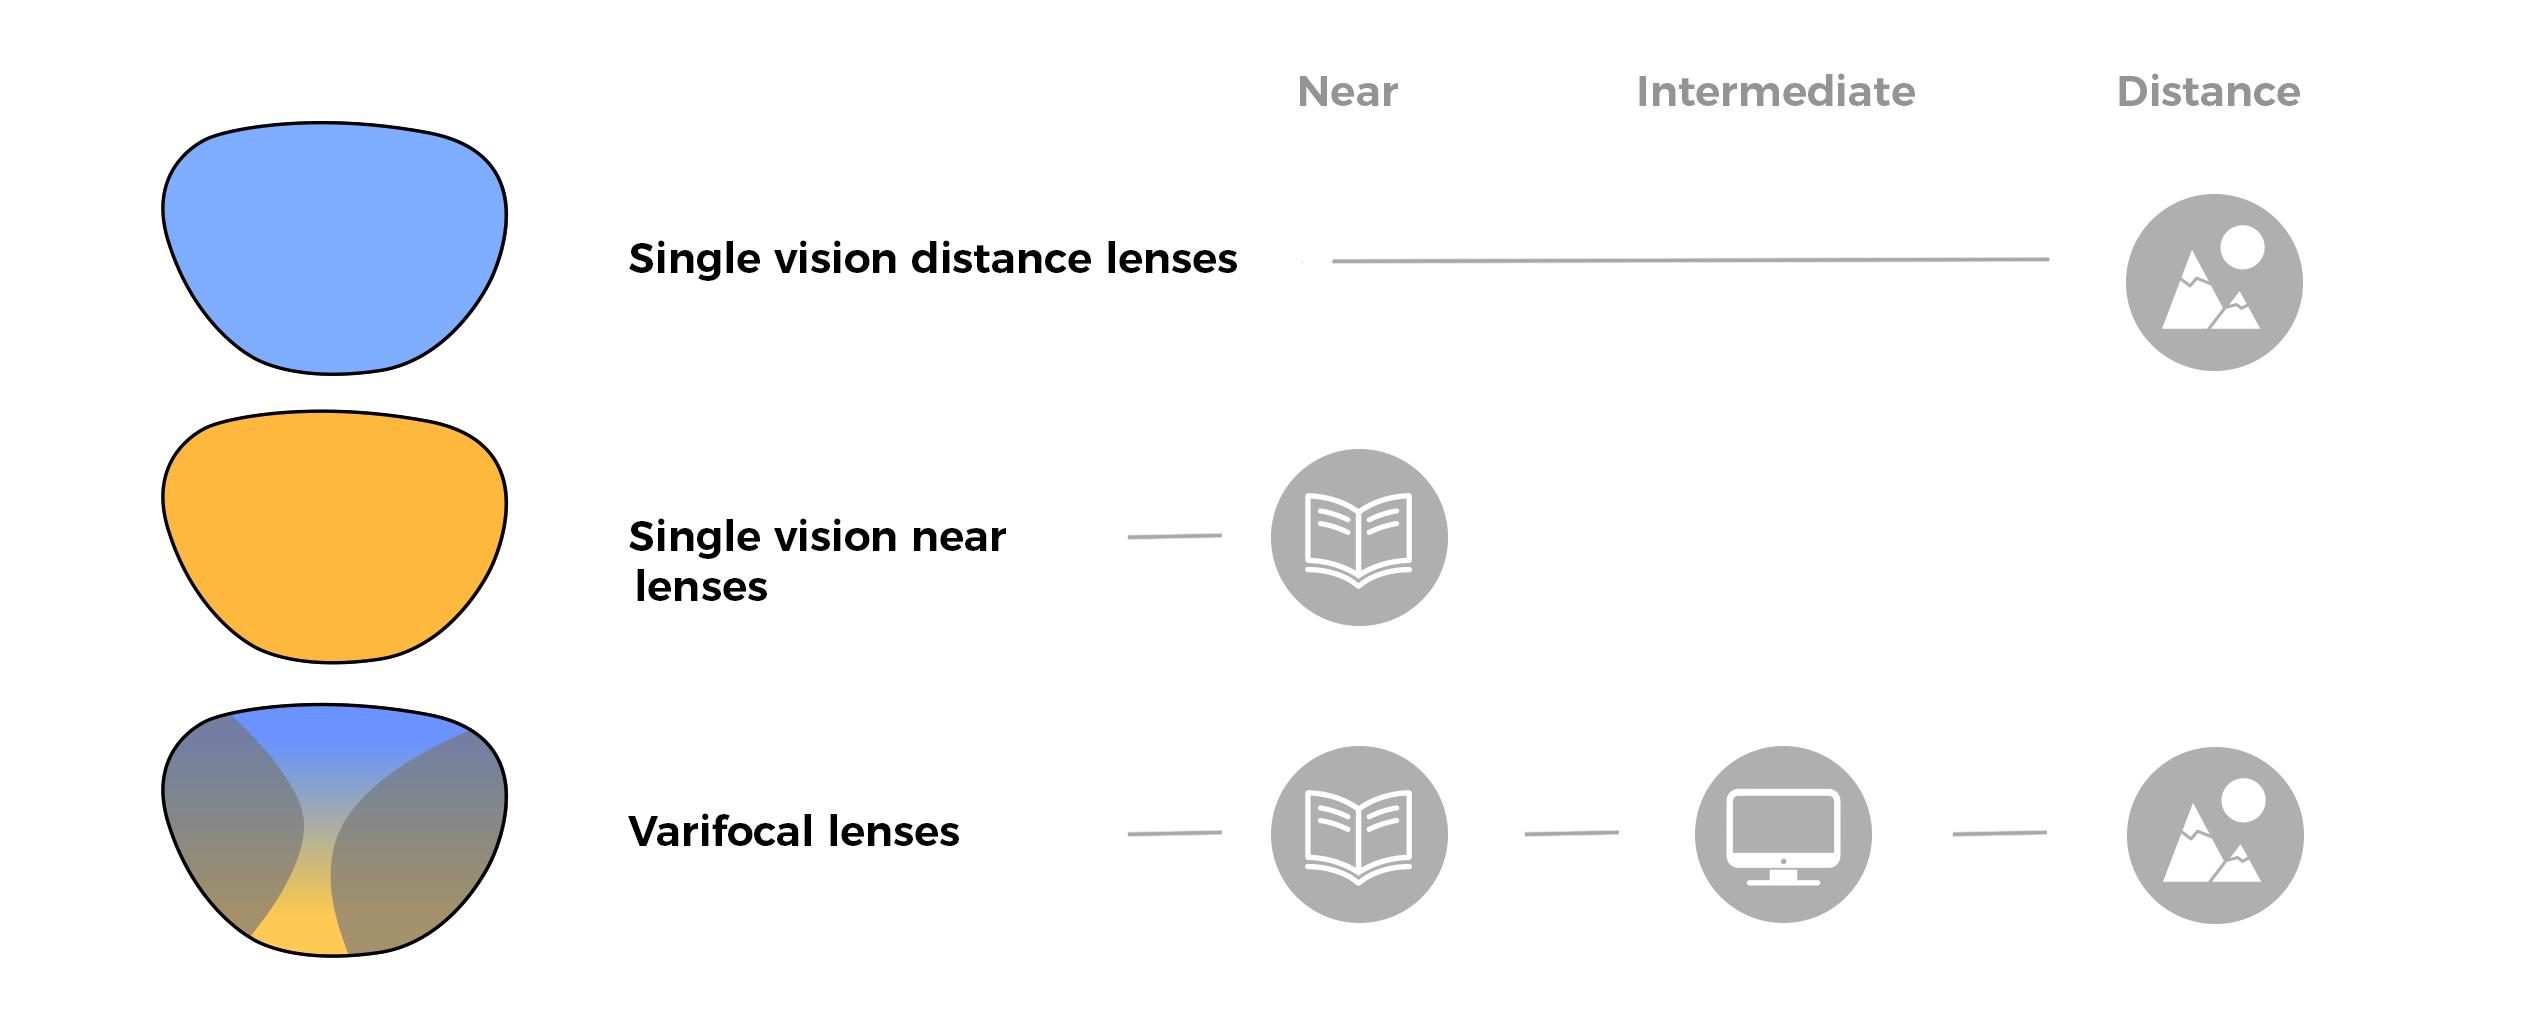 Illustration of single vision distance lenses, single vision near lenses, and varifocal lenses